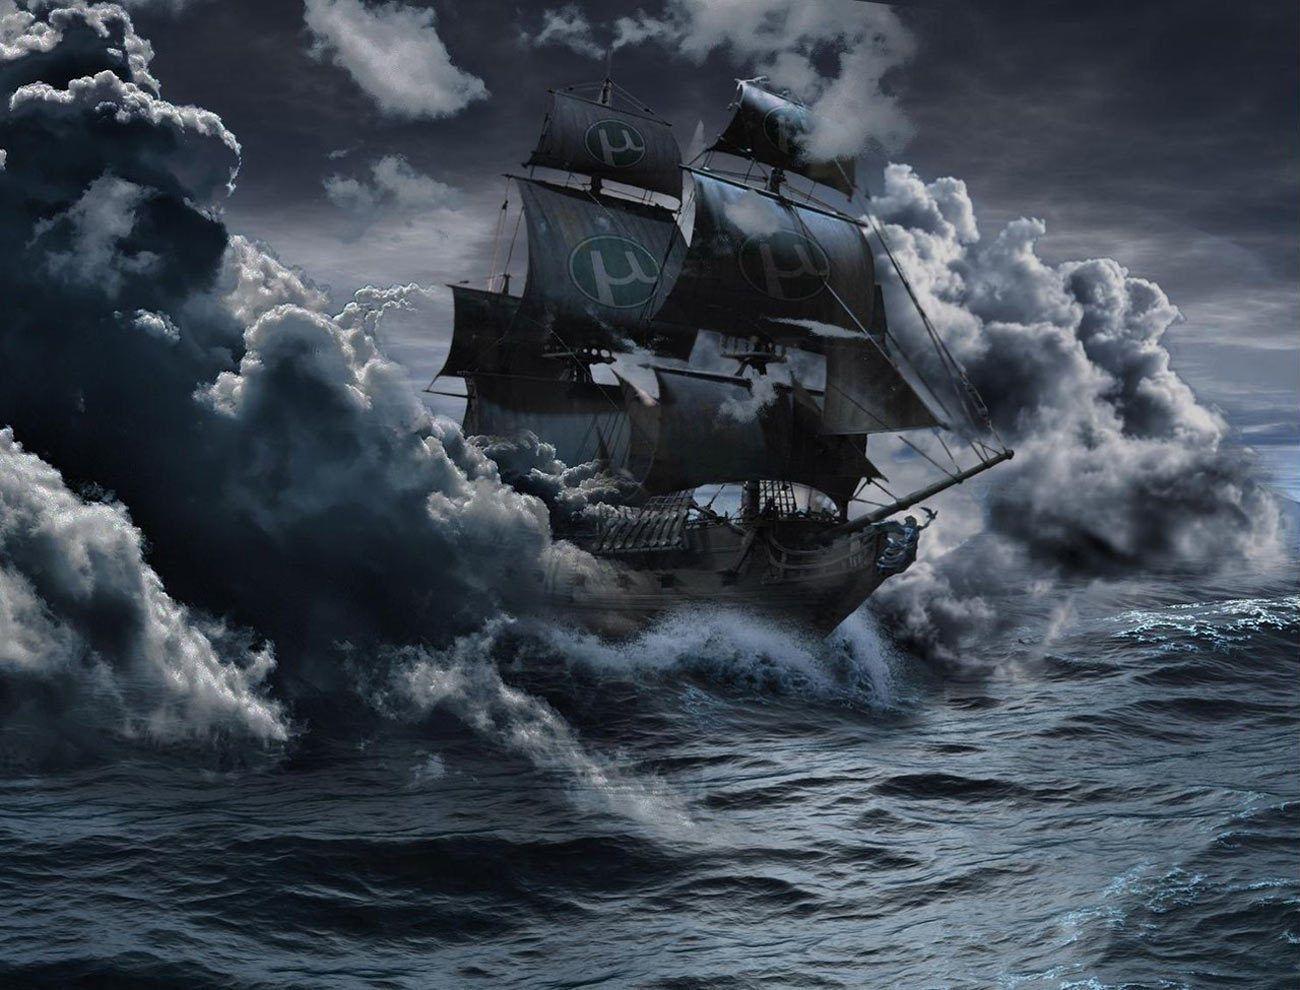 Ghost Ship ship wallpaper, a pirate ghost ship